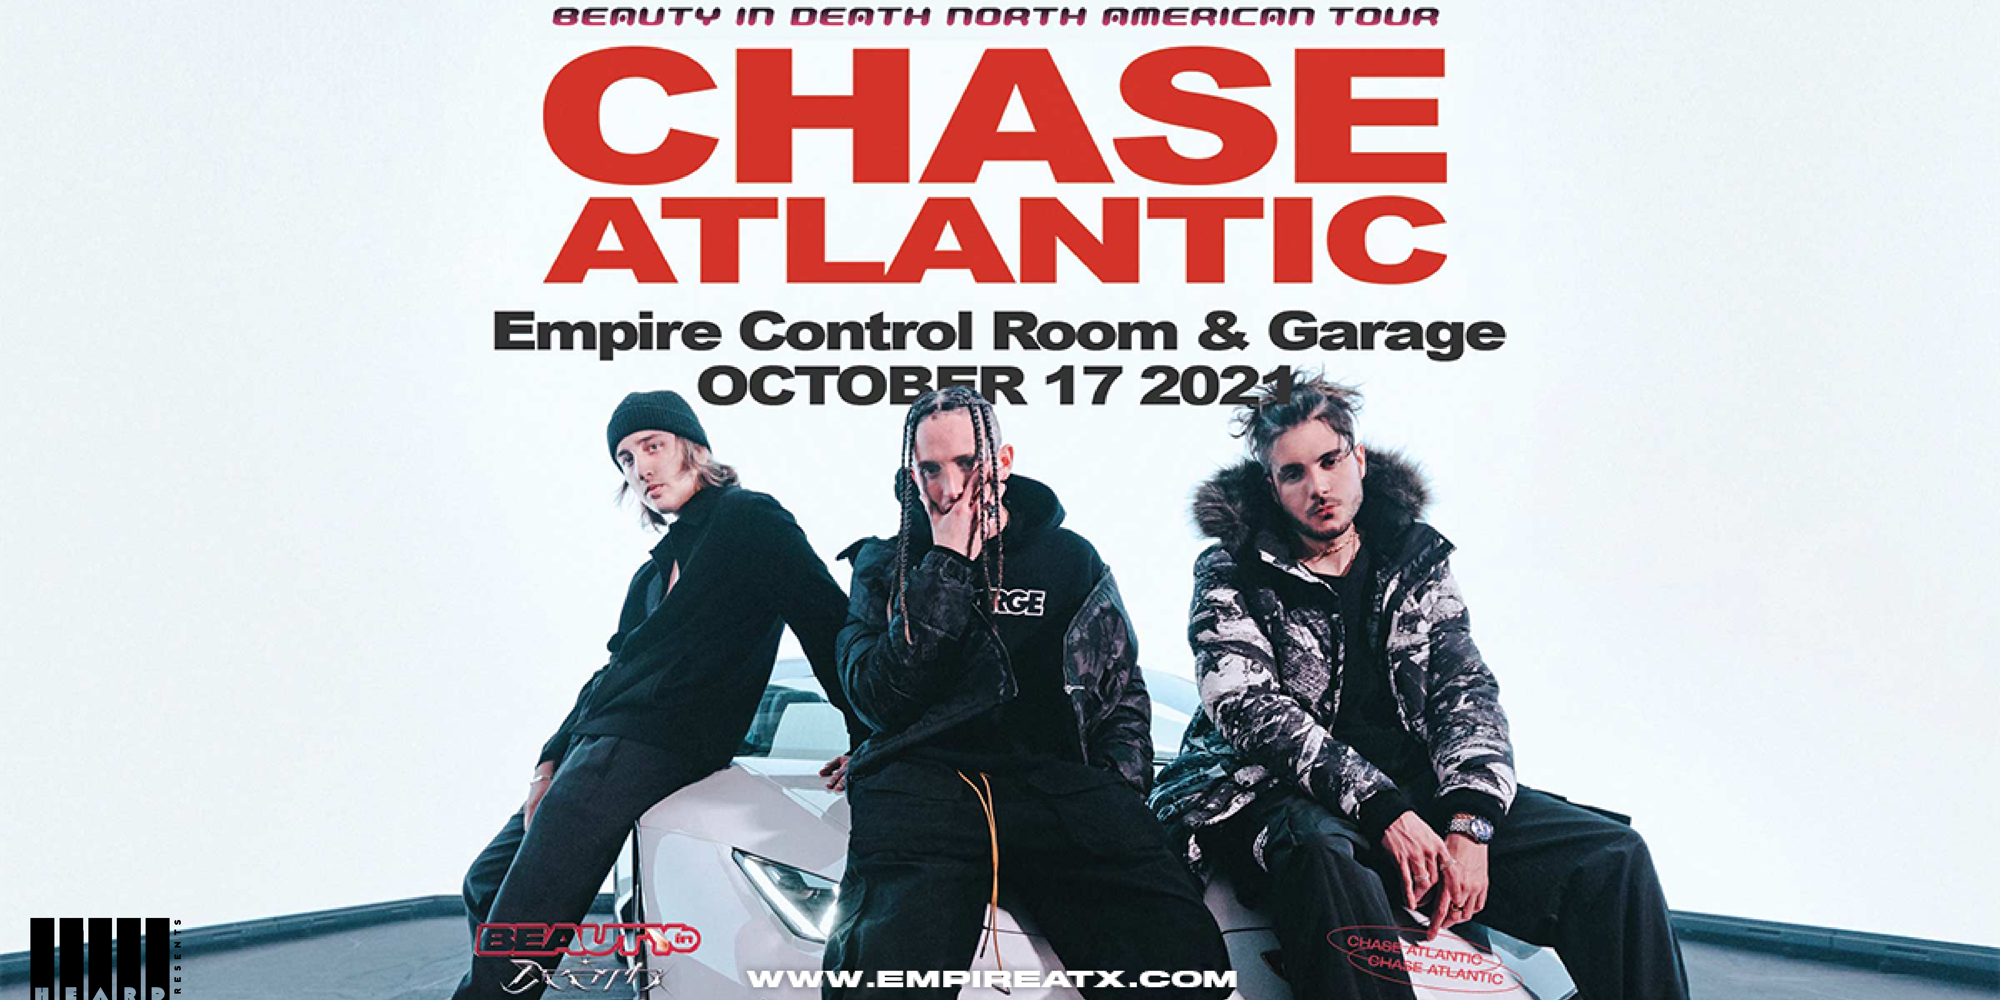 Chase Atlantic at Empire Garage 10/17 promotional image